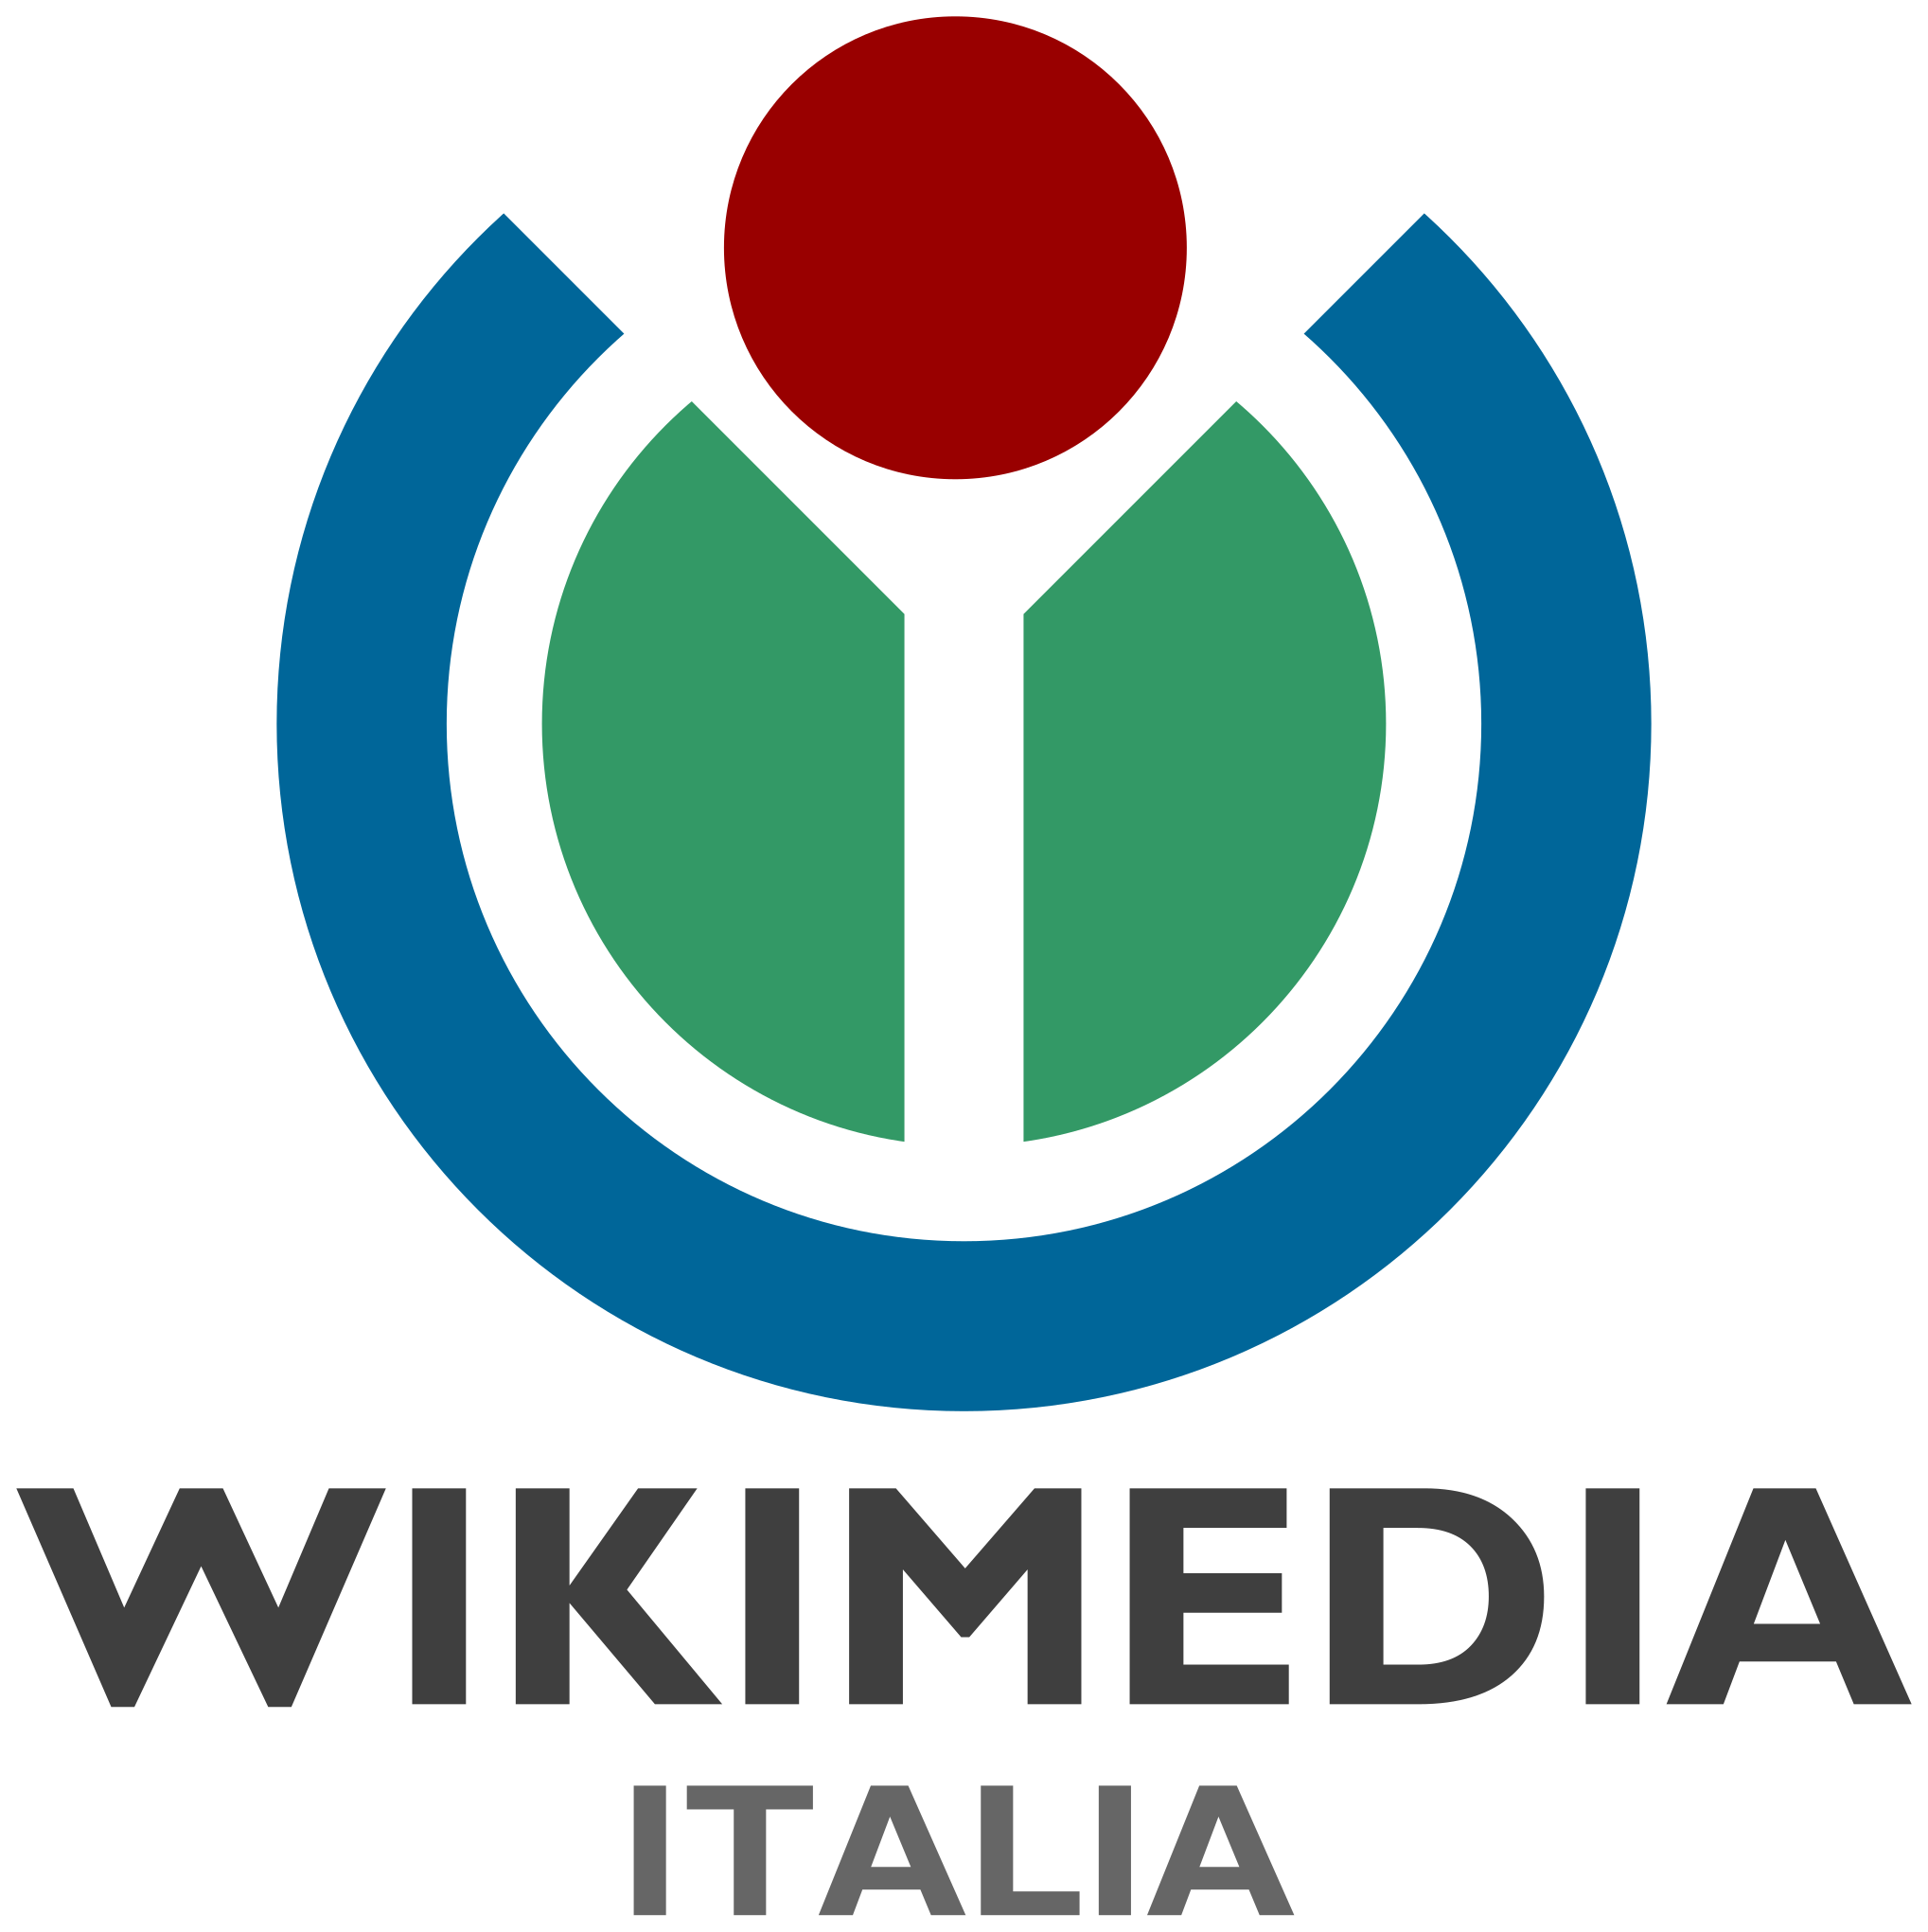 Wikimedia Italia logo